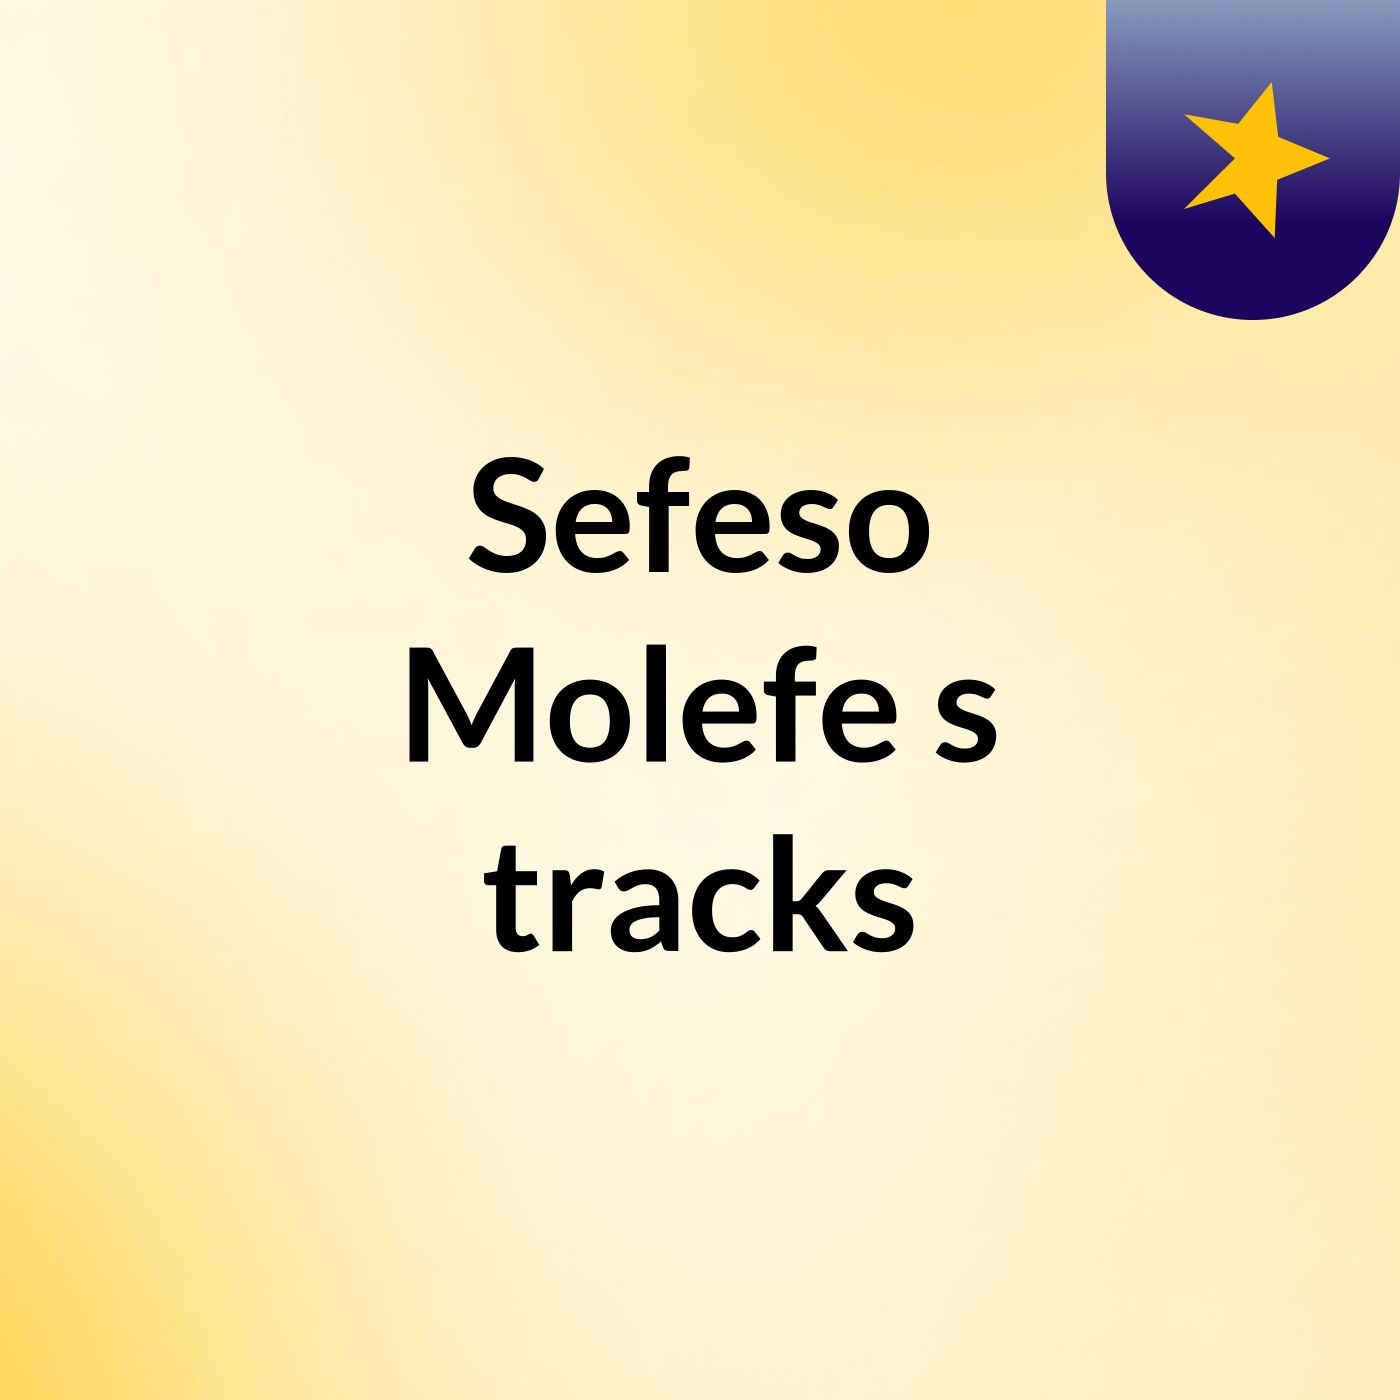 Episode 13 - Sefeso Molefe's tracks